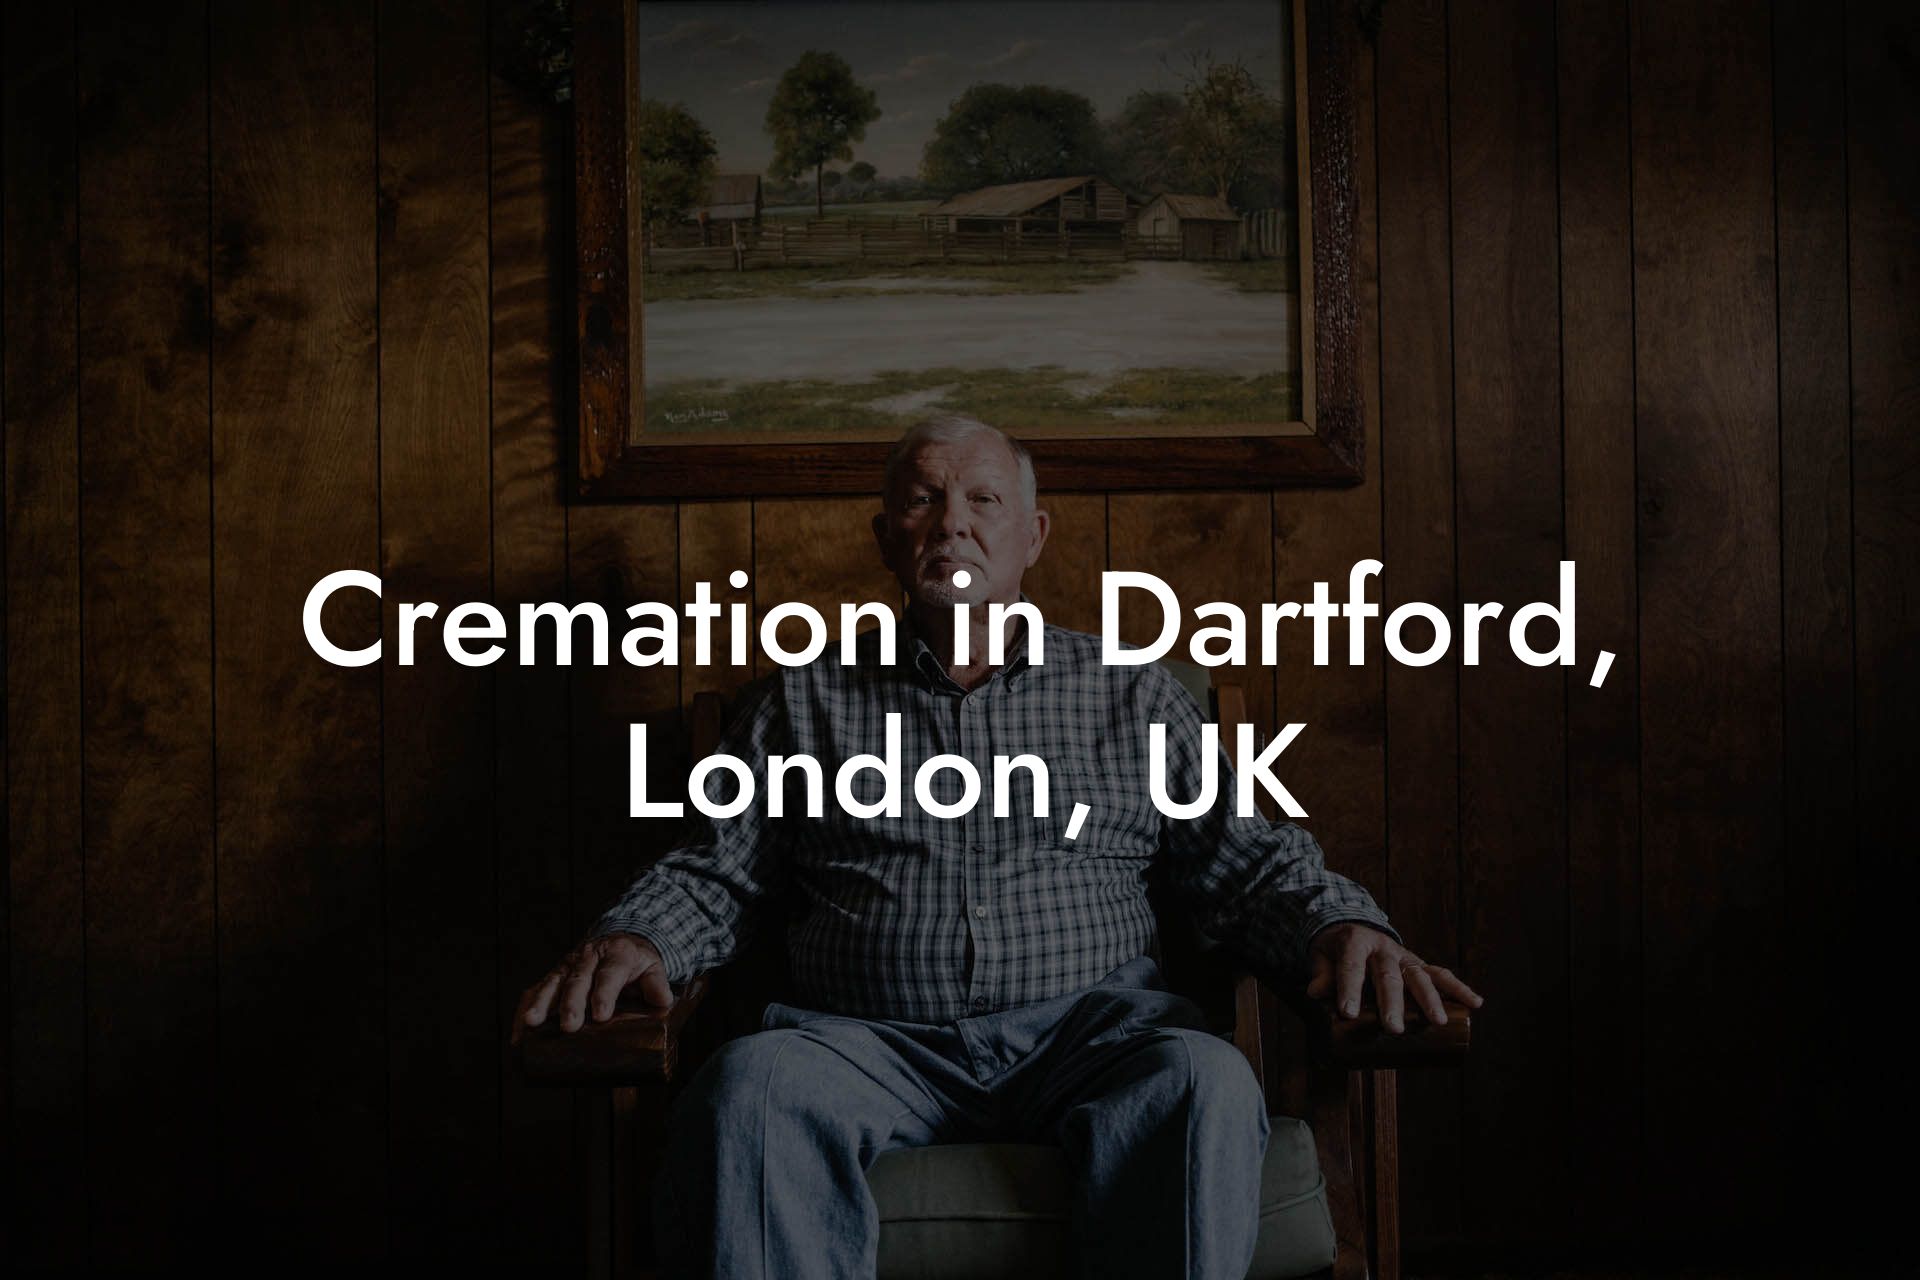 Cremation in Dartford, London, UK